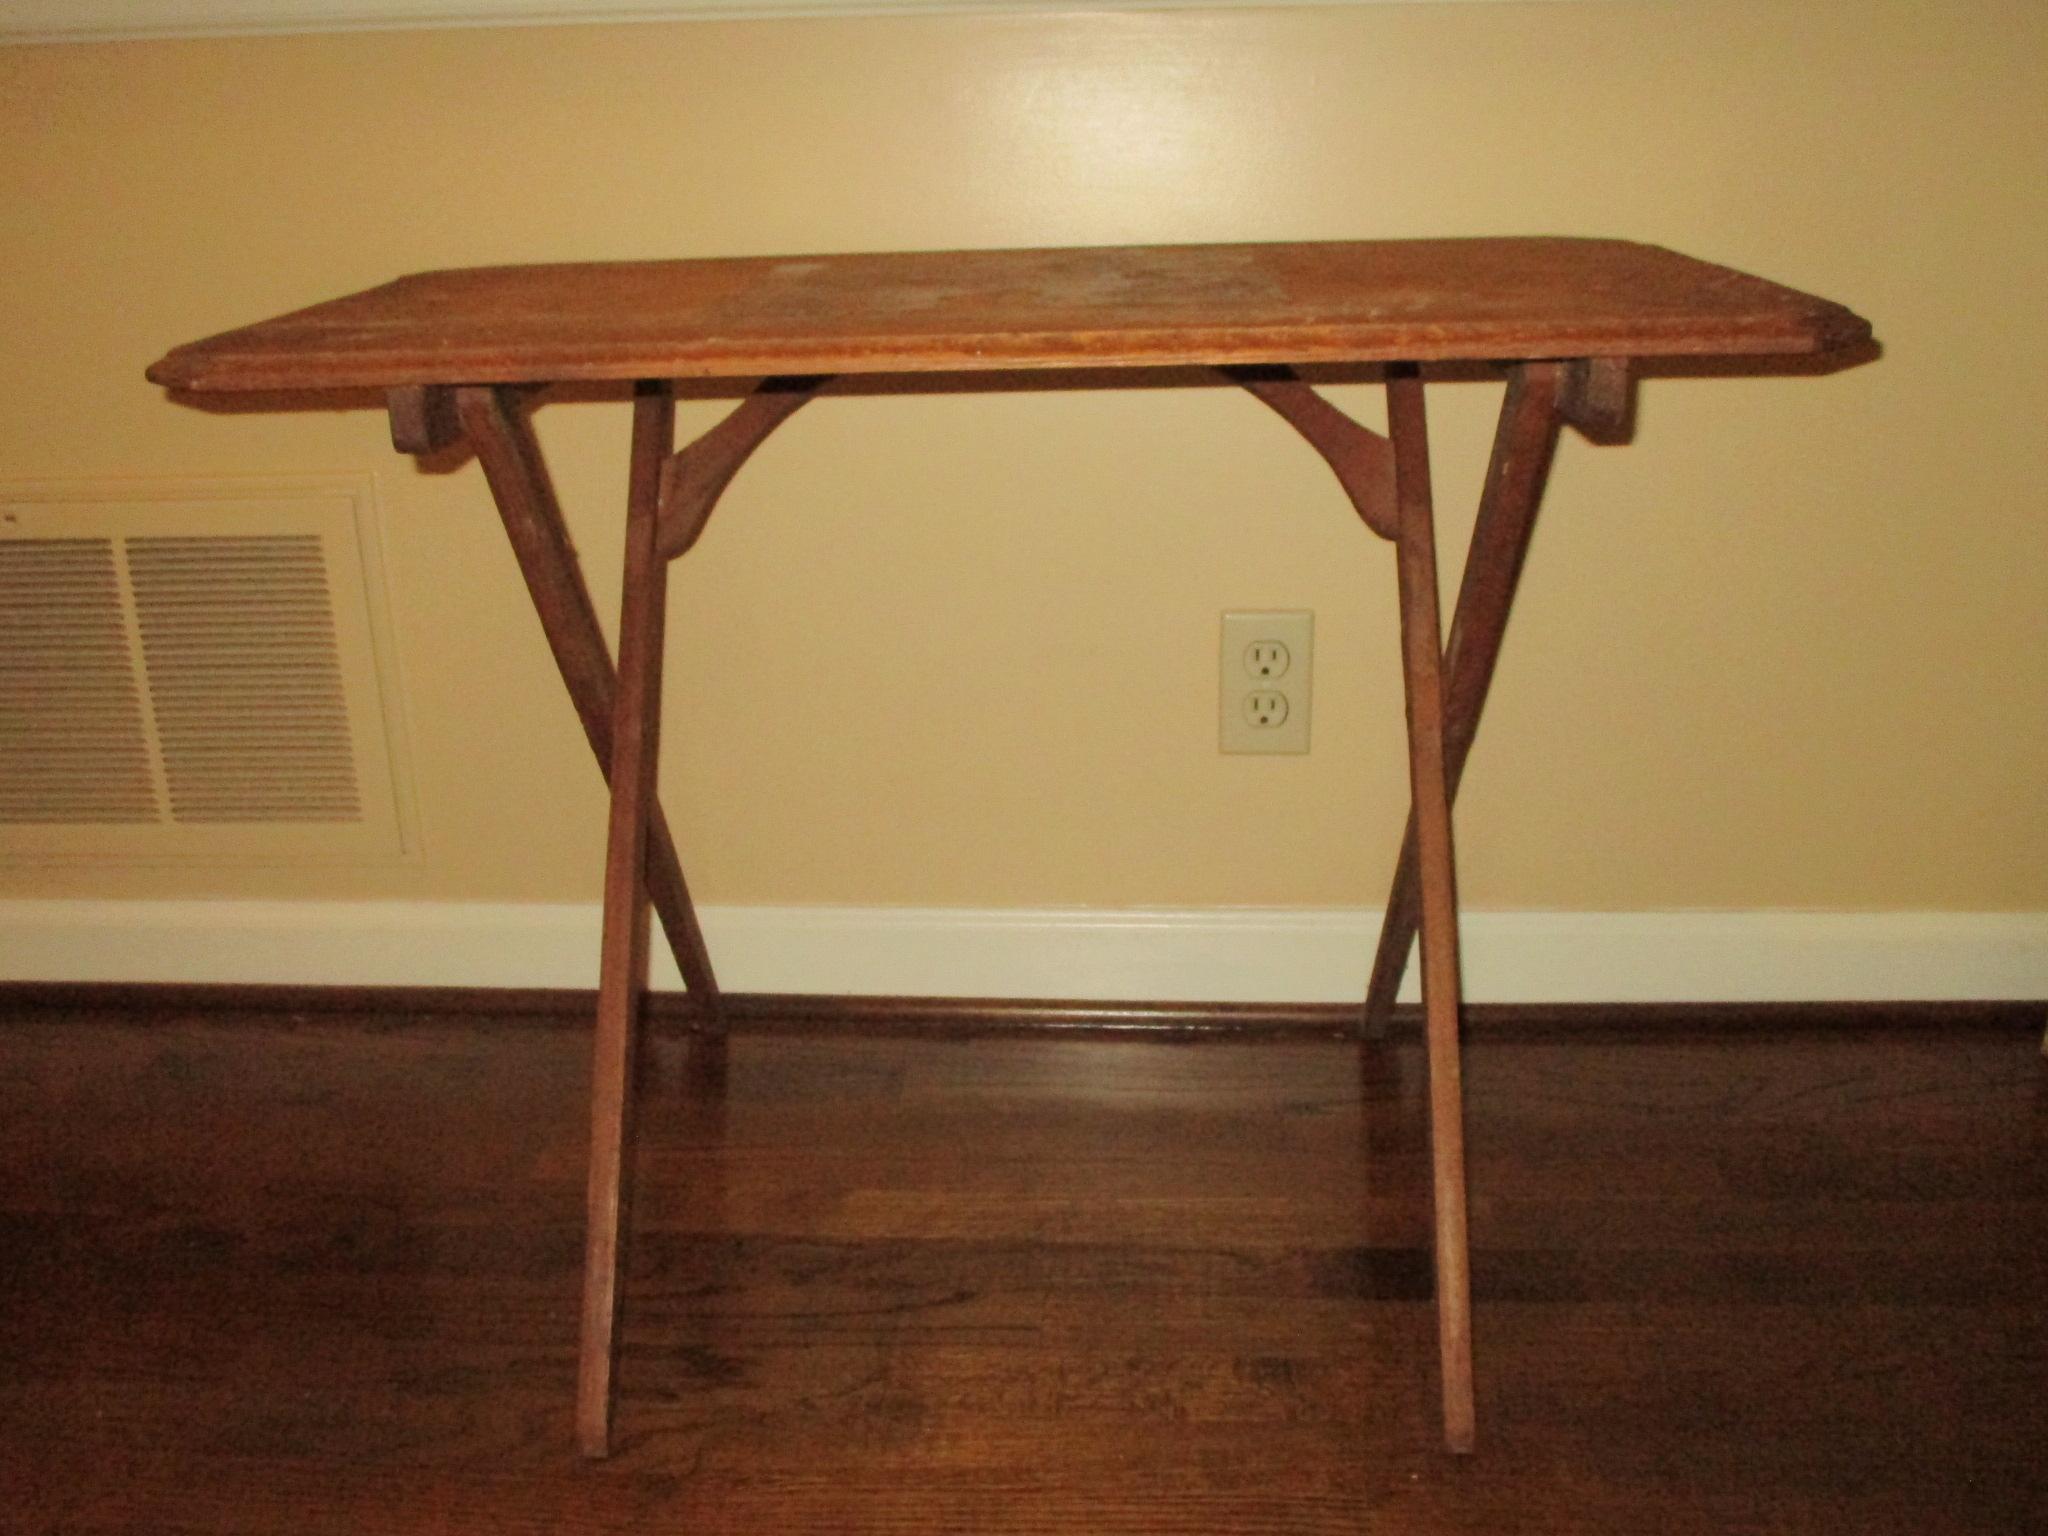 Folding Wooden Table w/Cheeseboard Platter on Top.